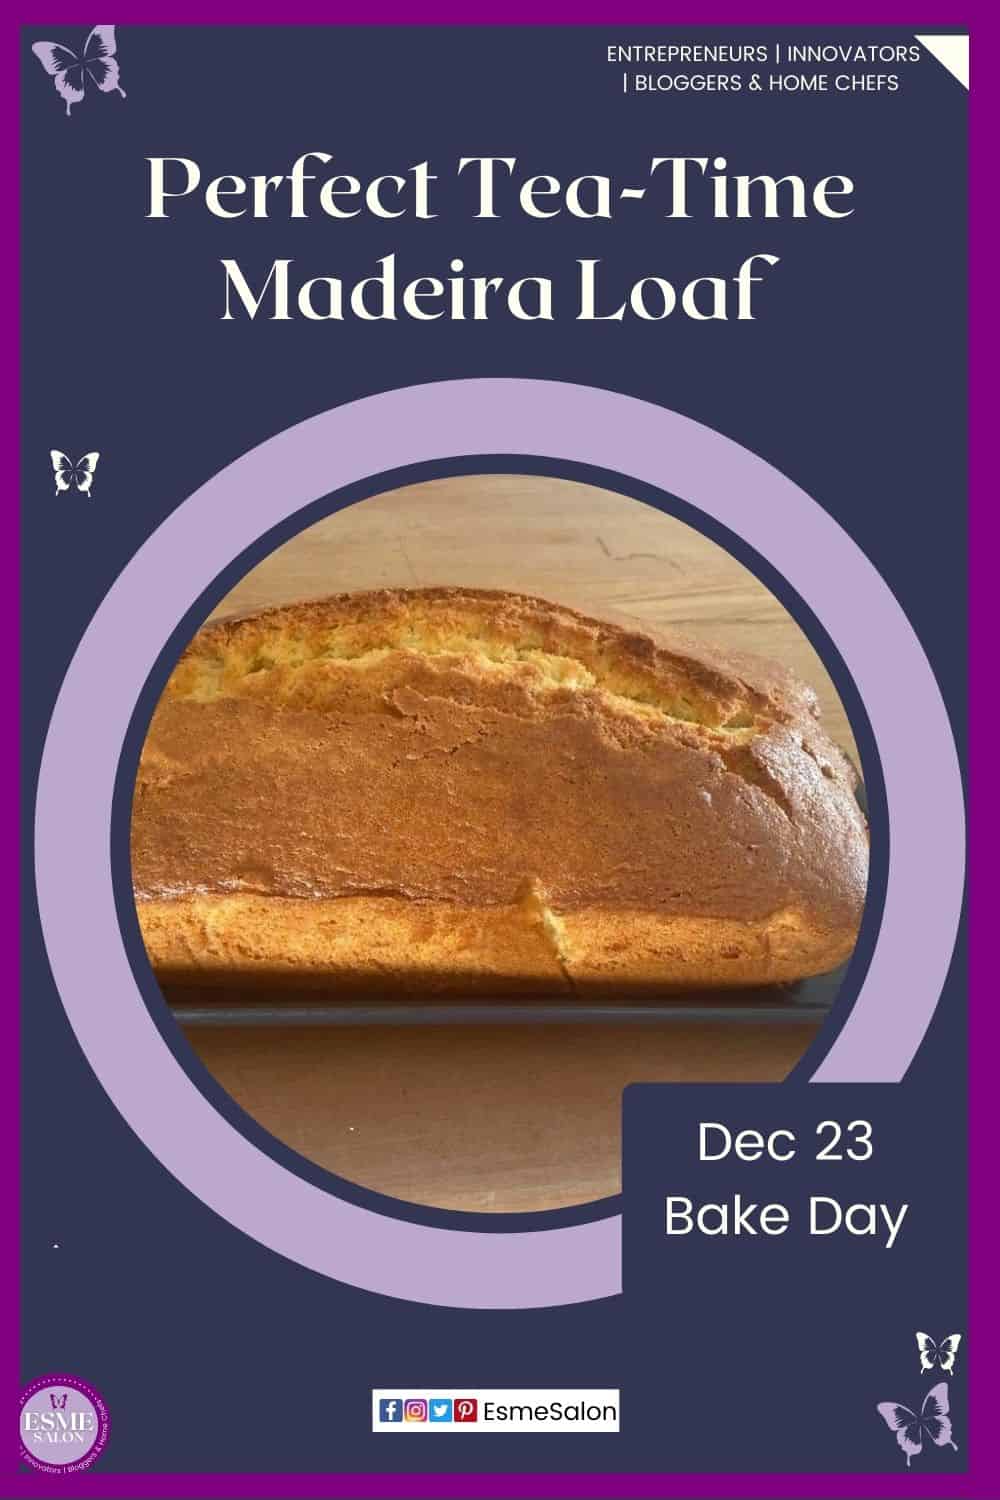 an image of a Tea-Time Madeira Loaf